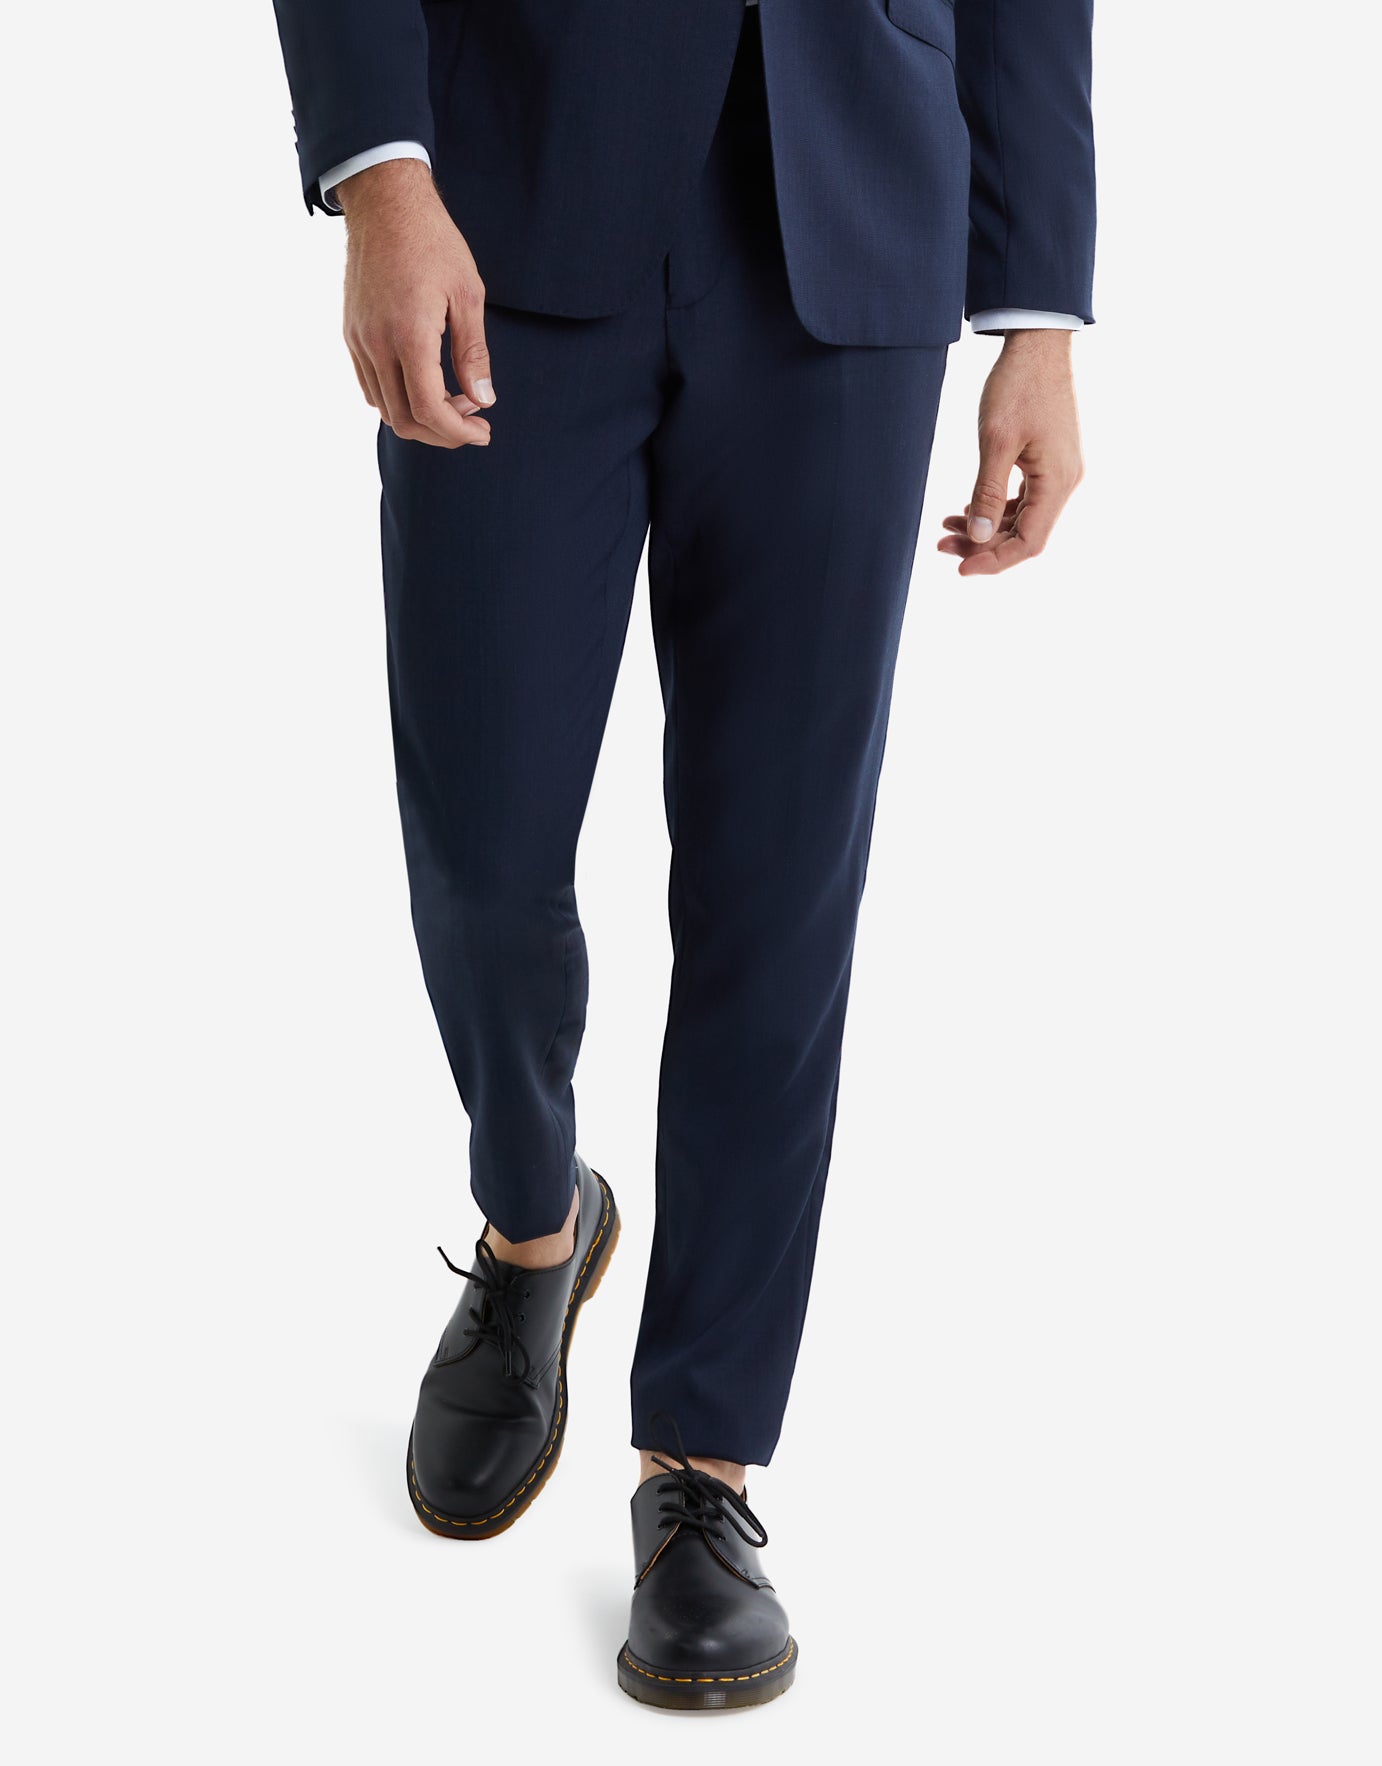 Buy Men Navy Solid Slim Fit Formal Trousers Online  663575  Peter England